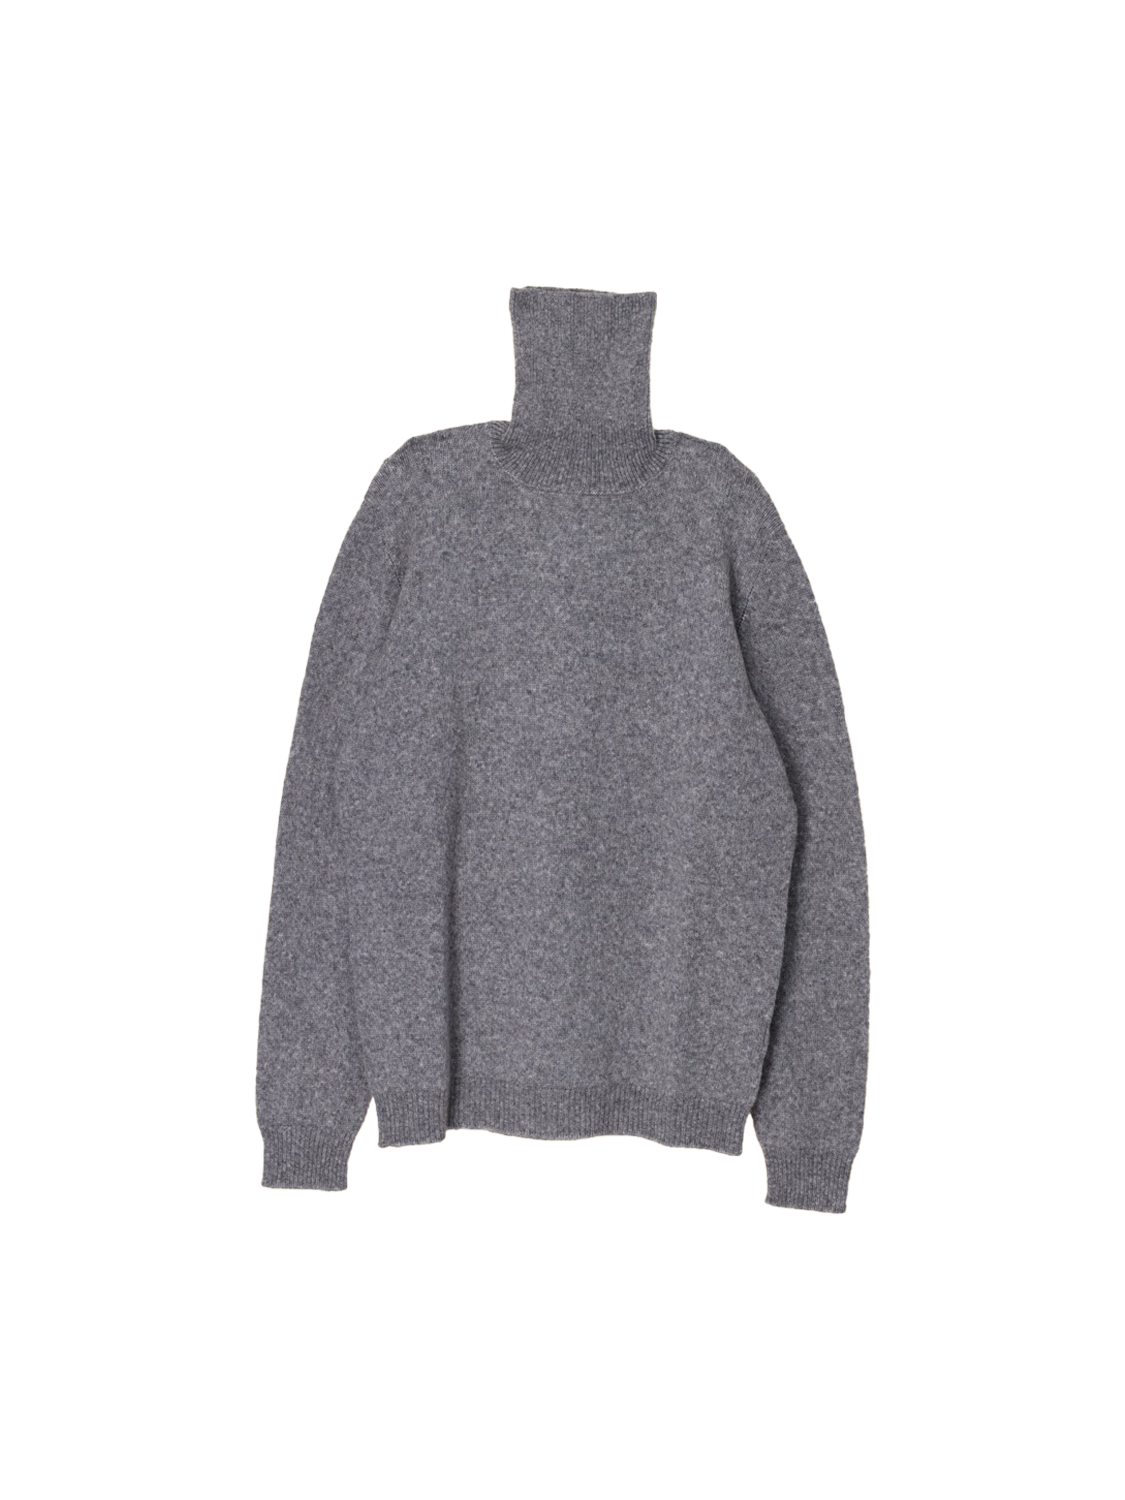 Merino wool turtleneck sweater 